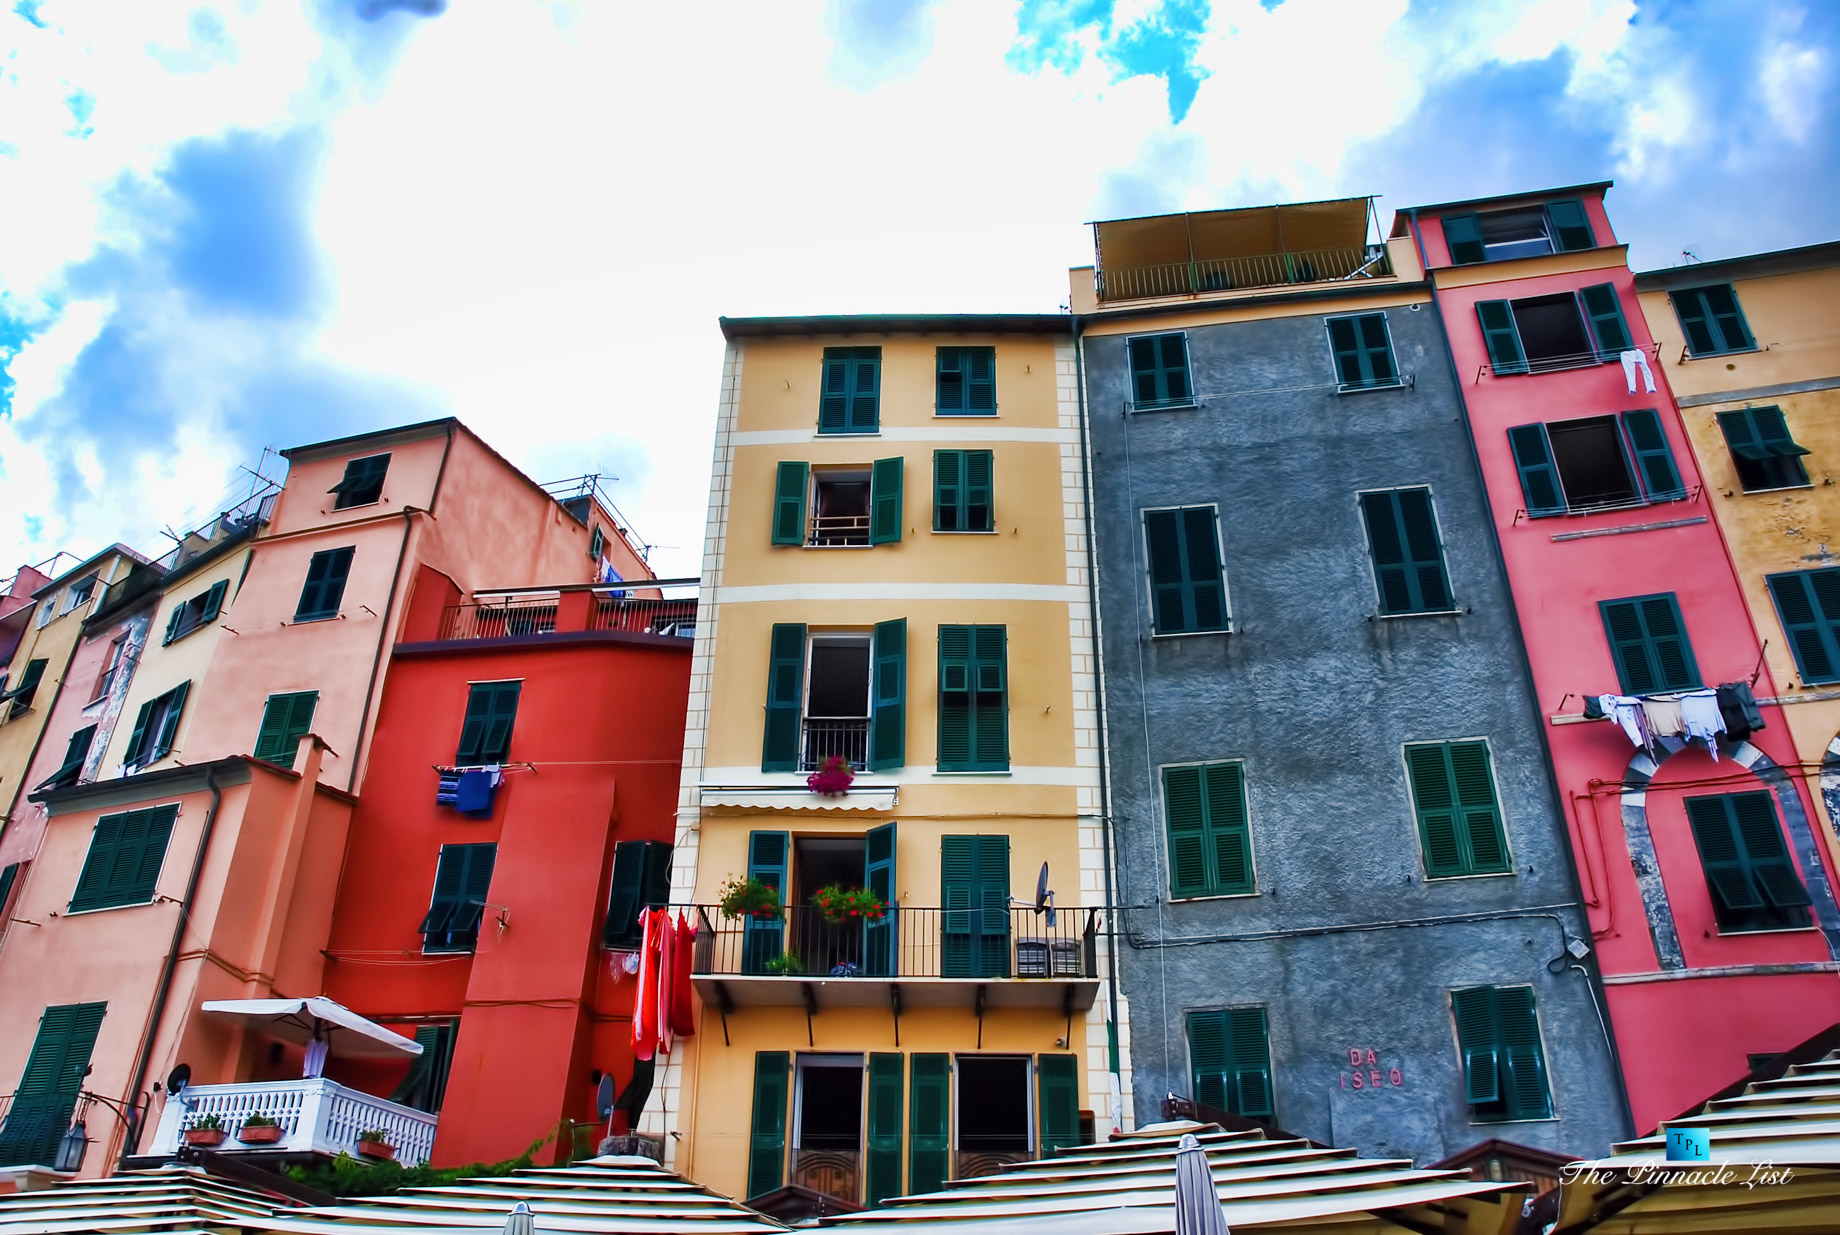 Portovenere, La Spezia, Liguria – Italy’s Hidden Treasure